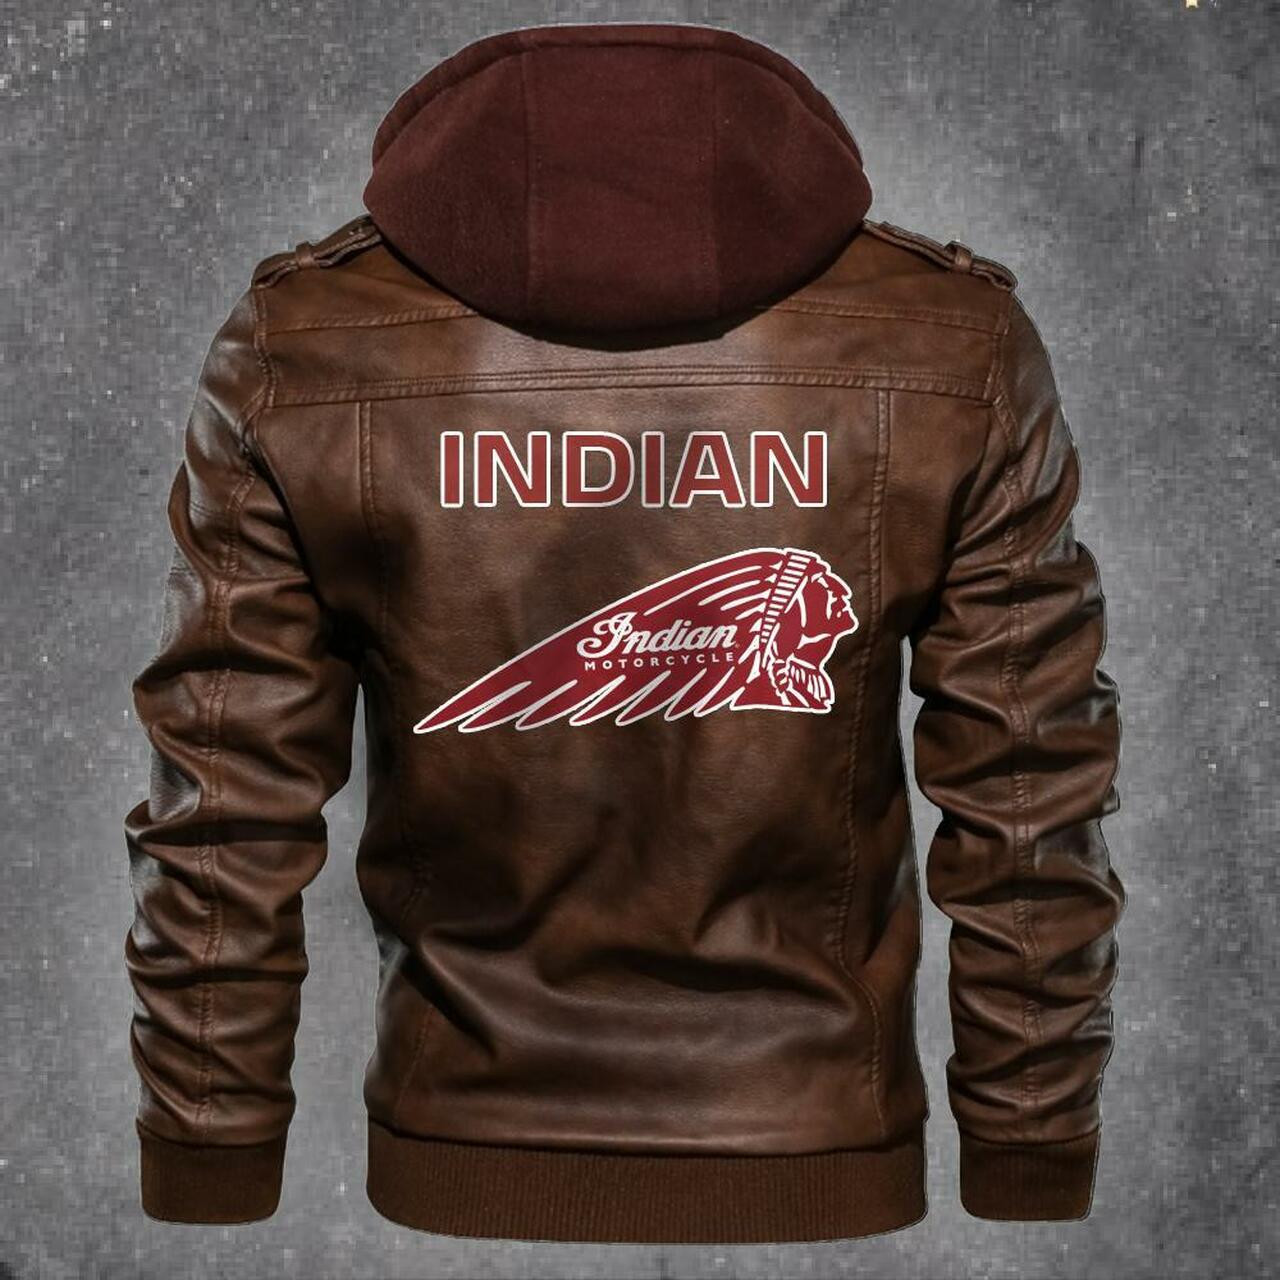 Top leather jacket Sells Best on Techcomshop 168